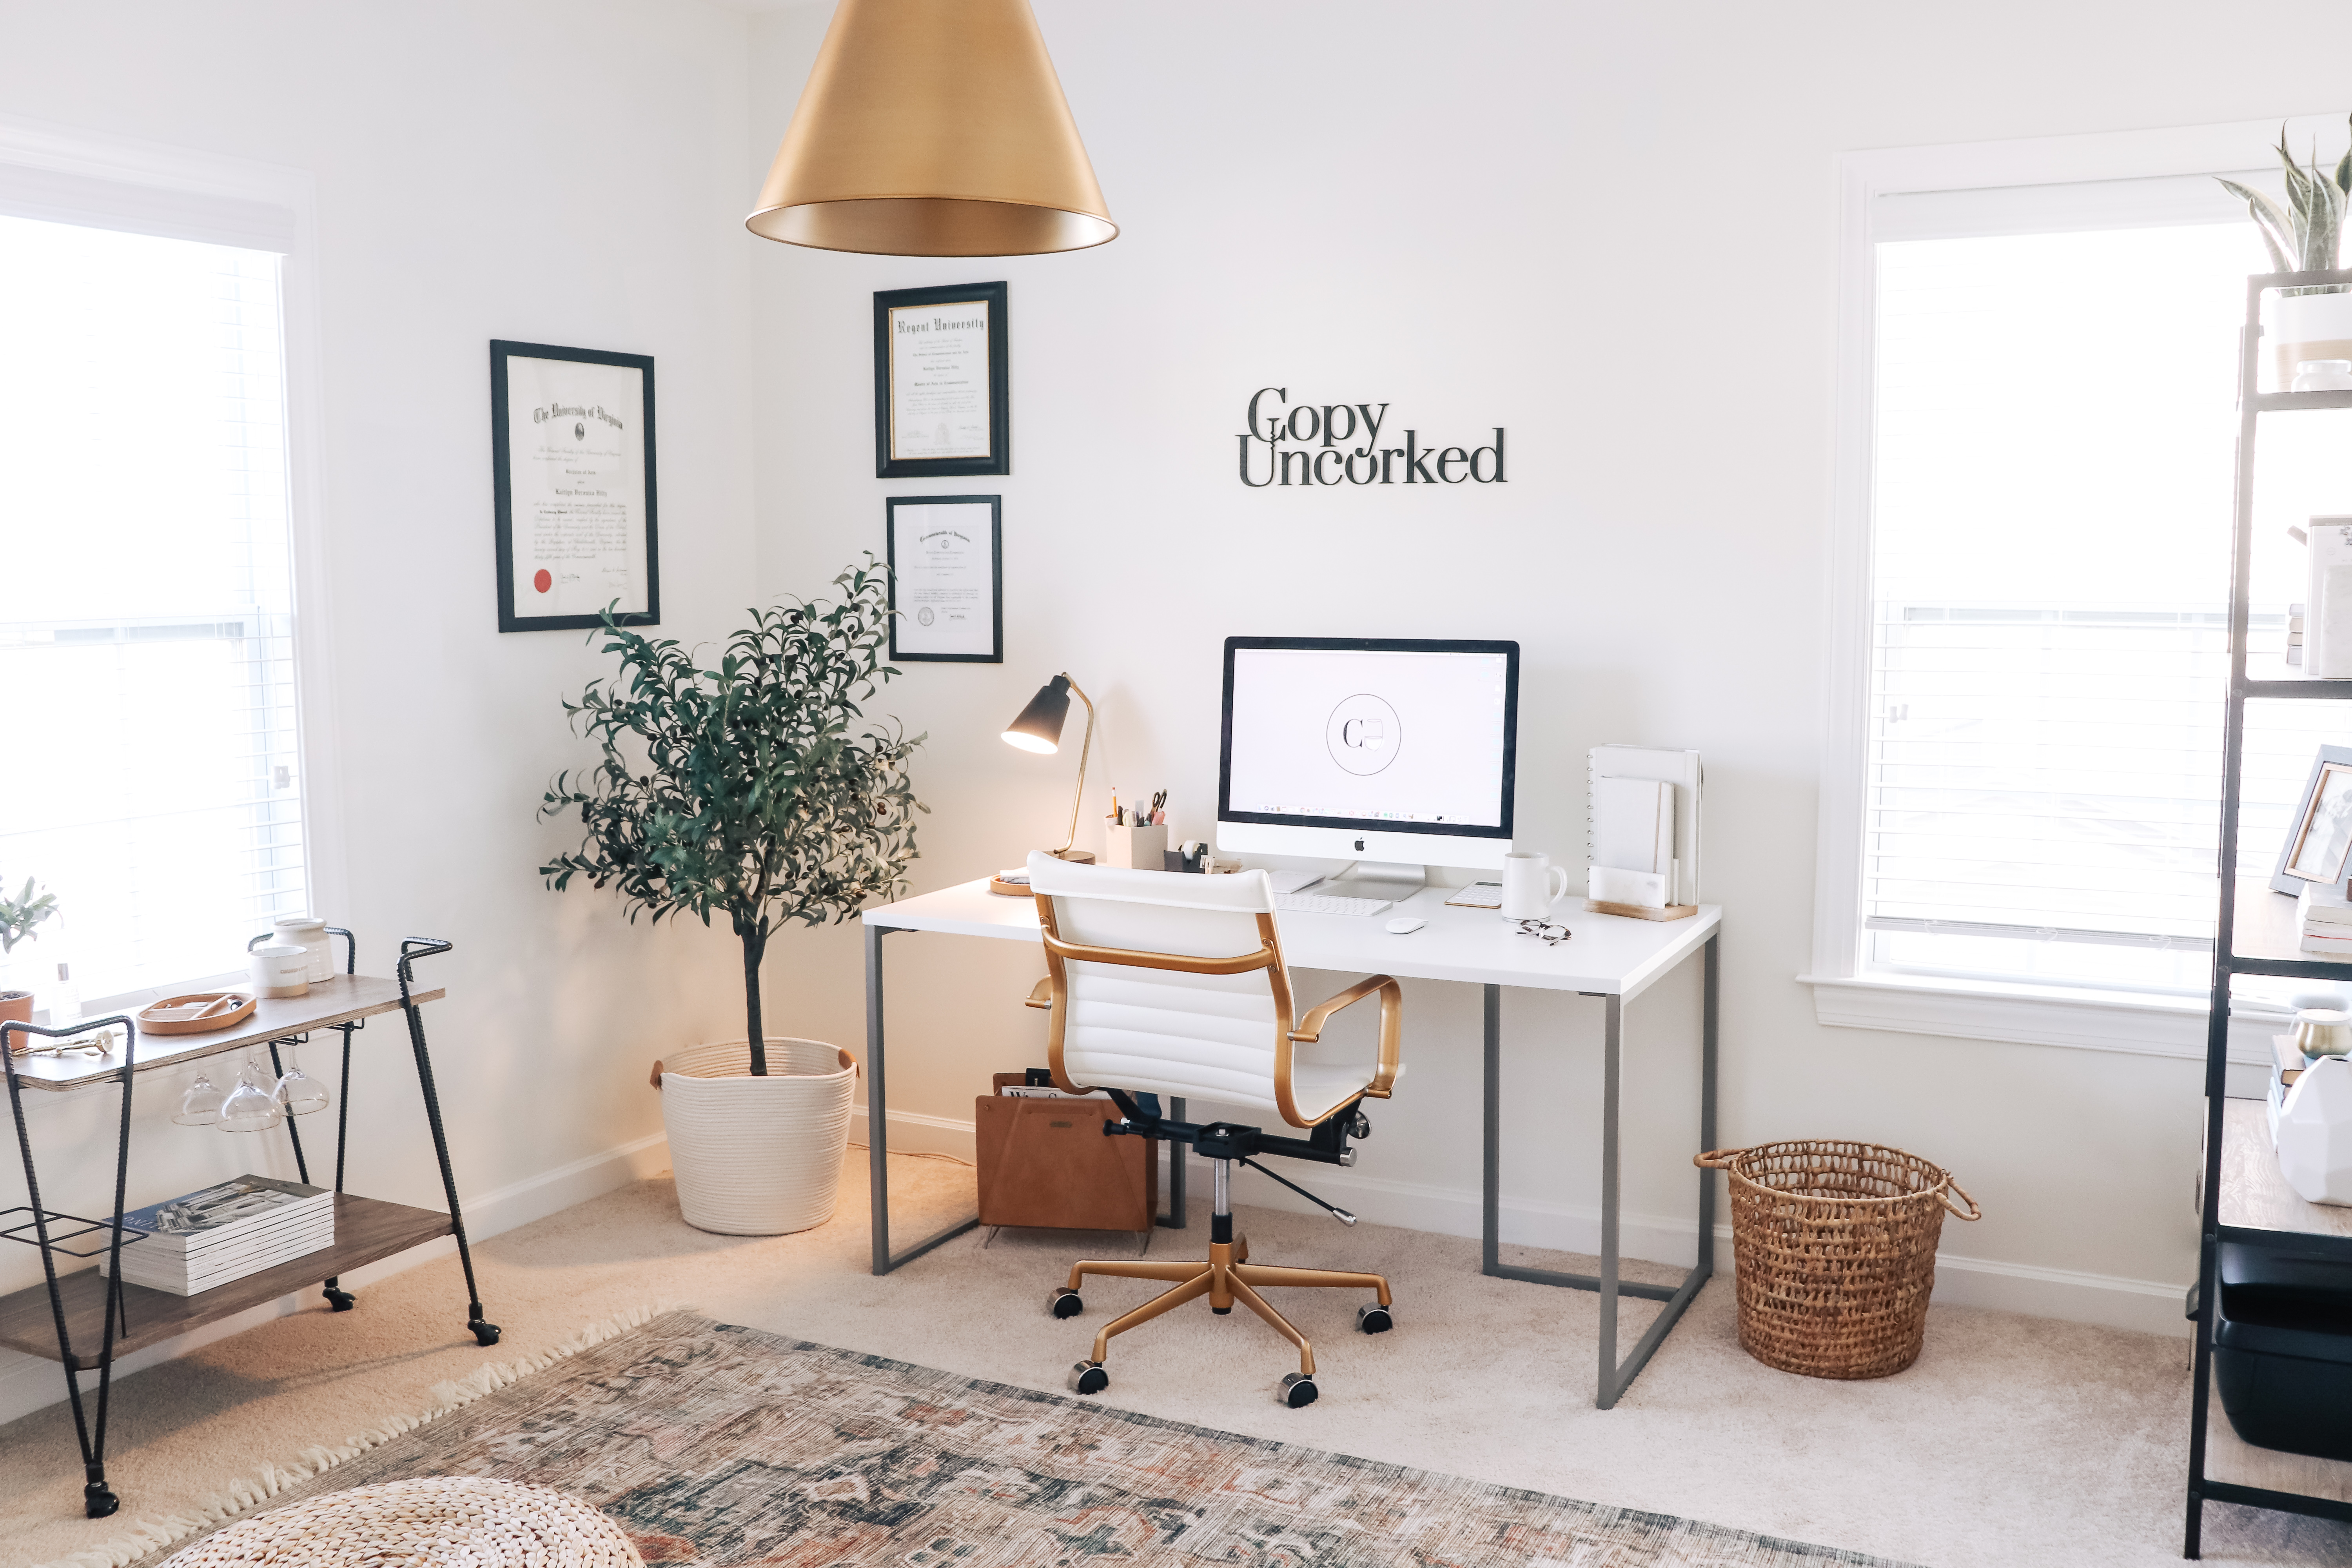 Home Office Design Reveal: Copy Uncorked - kaitlynhparker.com